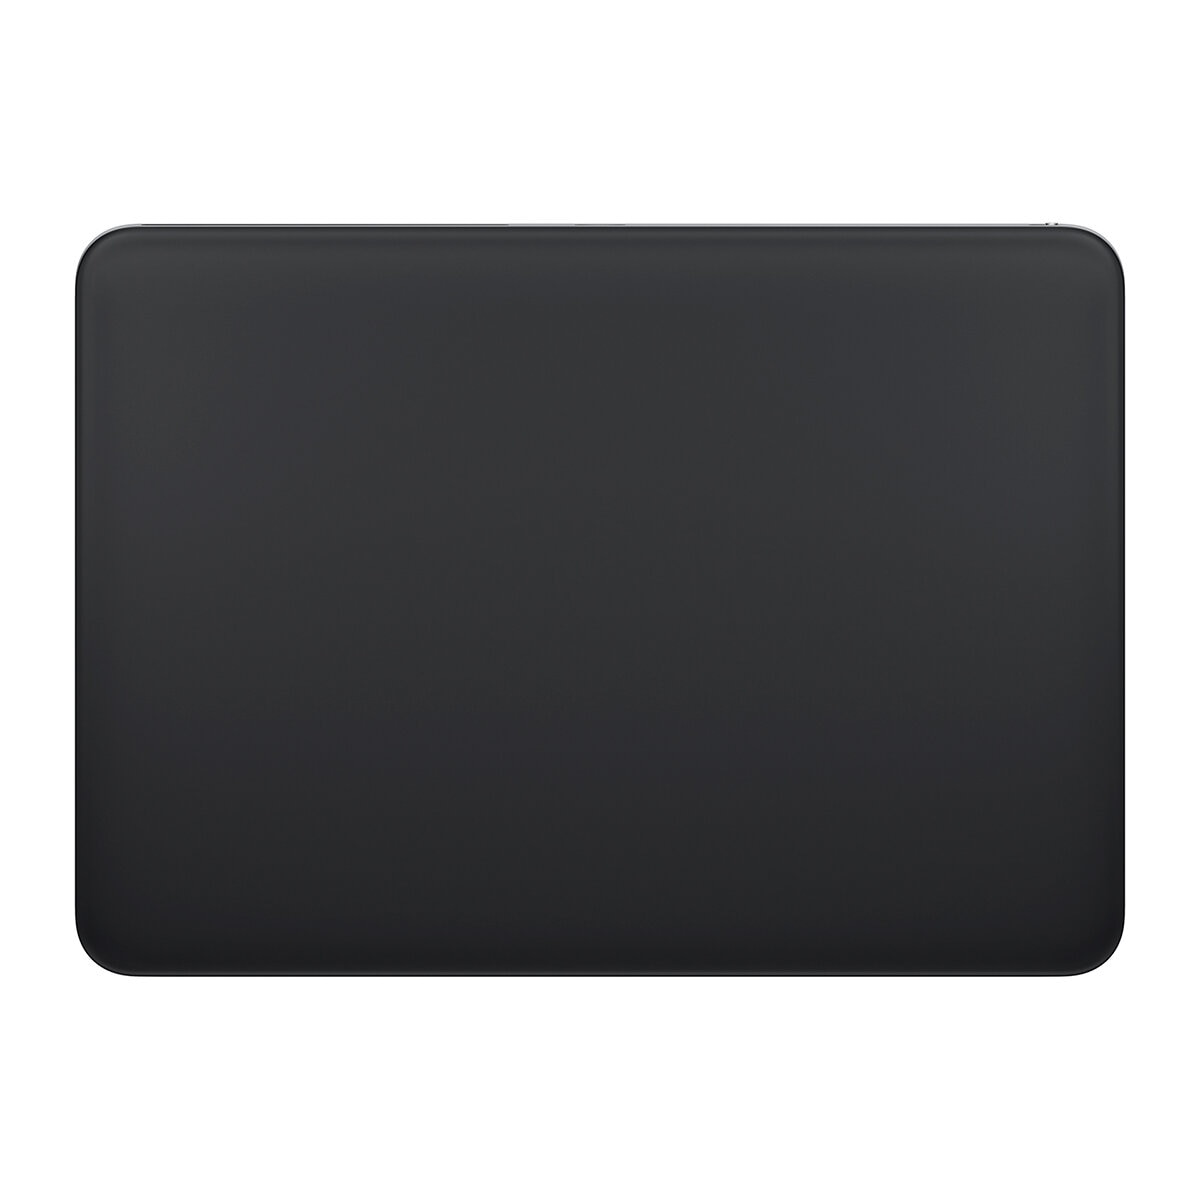 Apple Magic Trackpad Superficie Multi-Touch negra